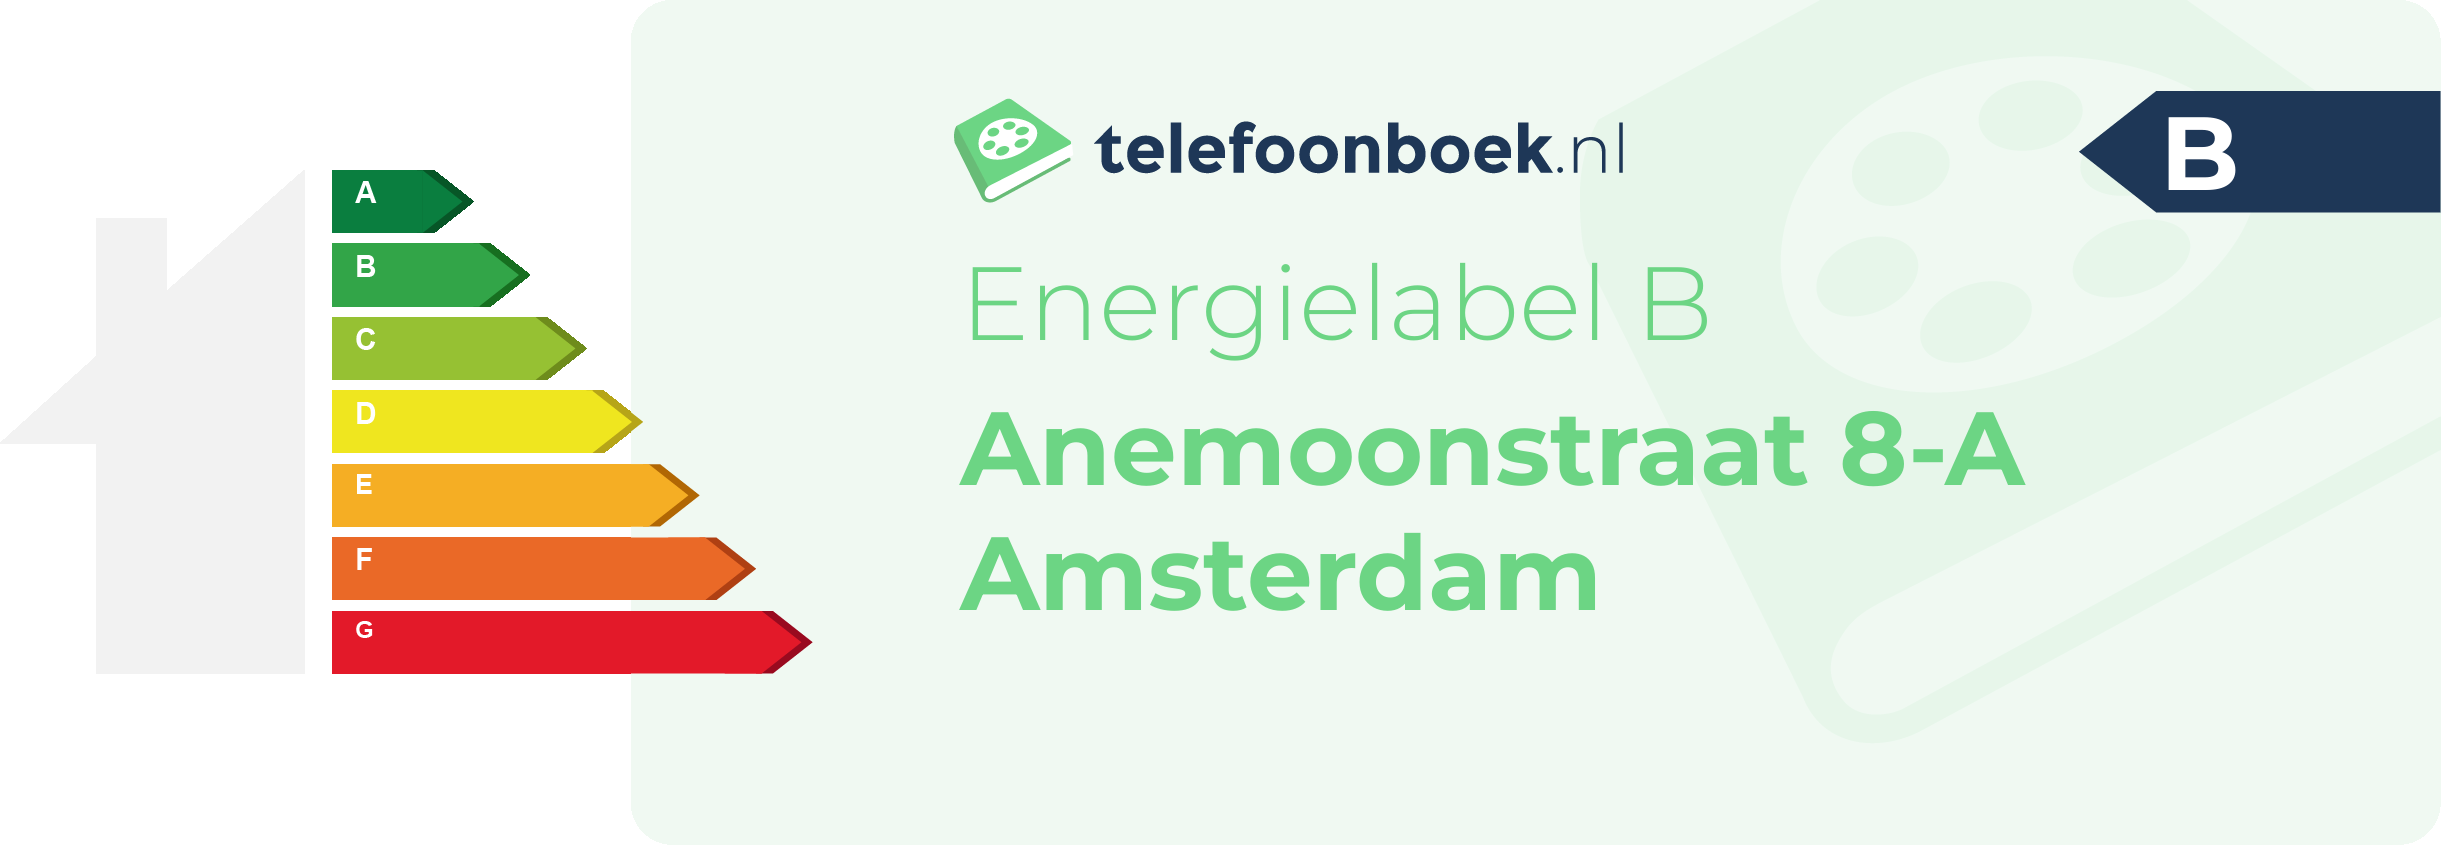 Energielabel Anemoonstraat 8-A Amsterdam